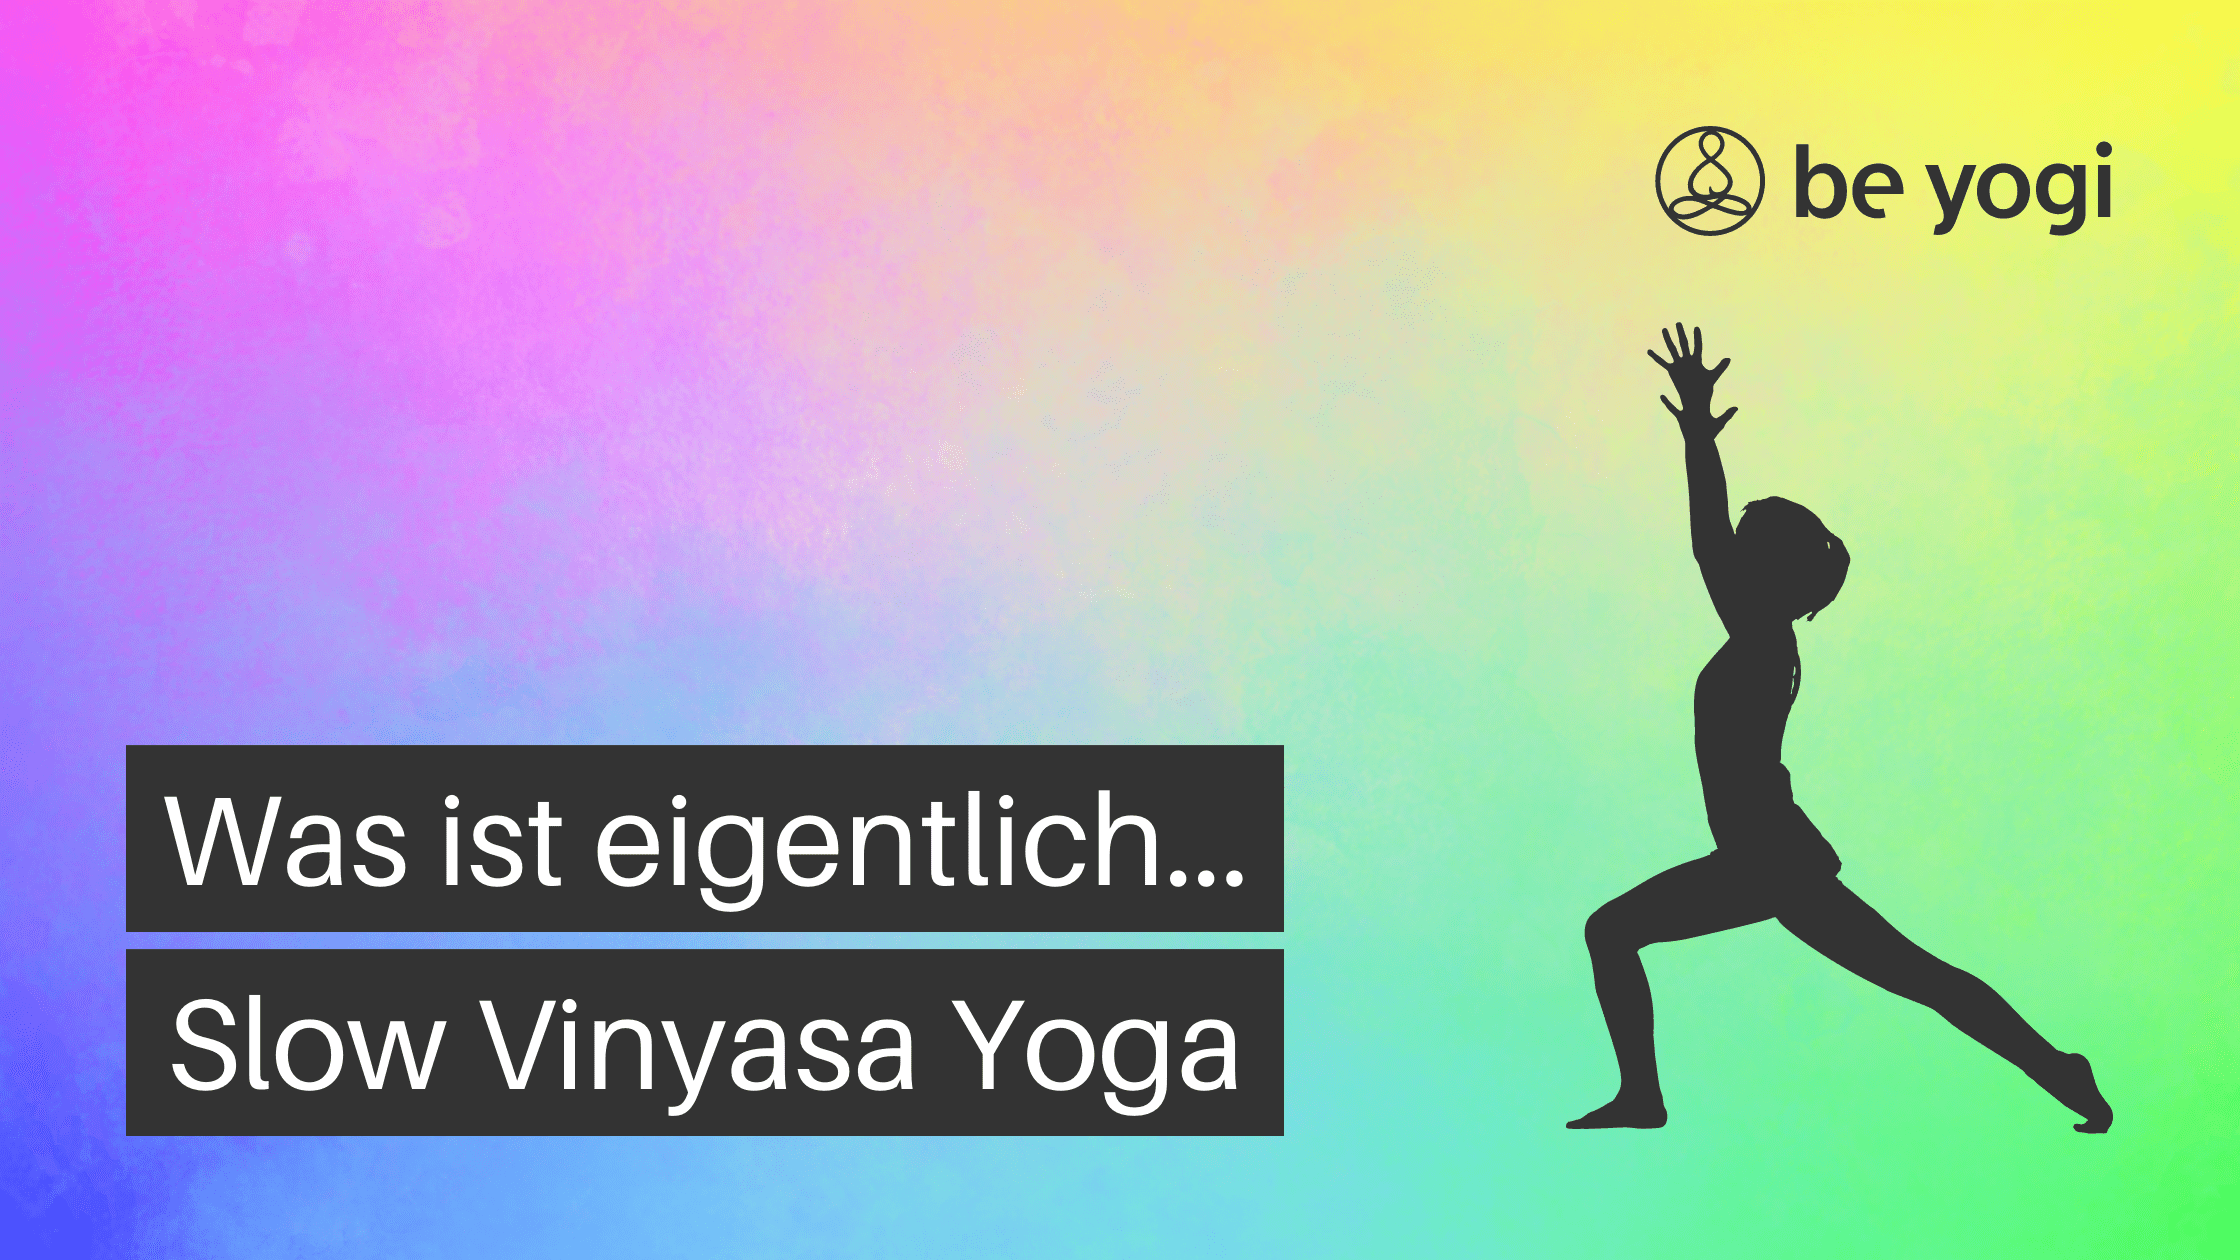 slow vinyasa yoga yoga stil chrakteristik typische merkmale Be Yogi Artikel yoga ayurveda